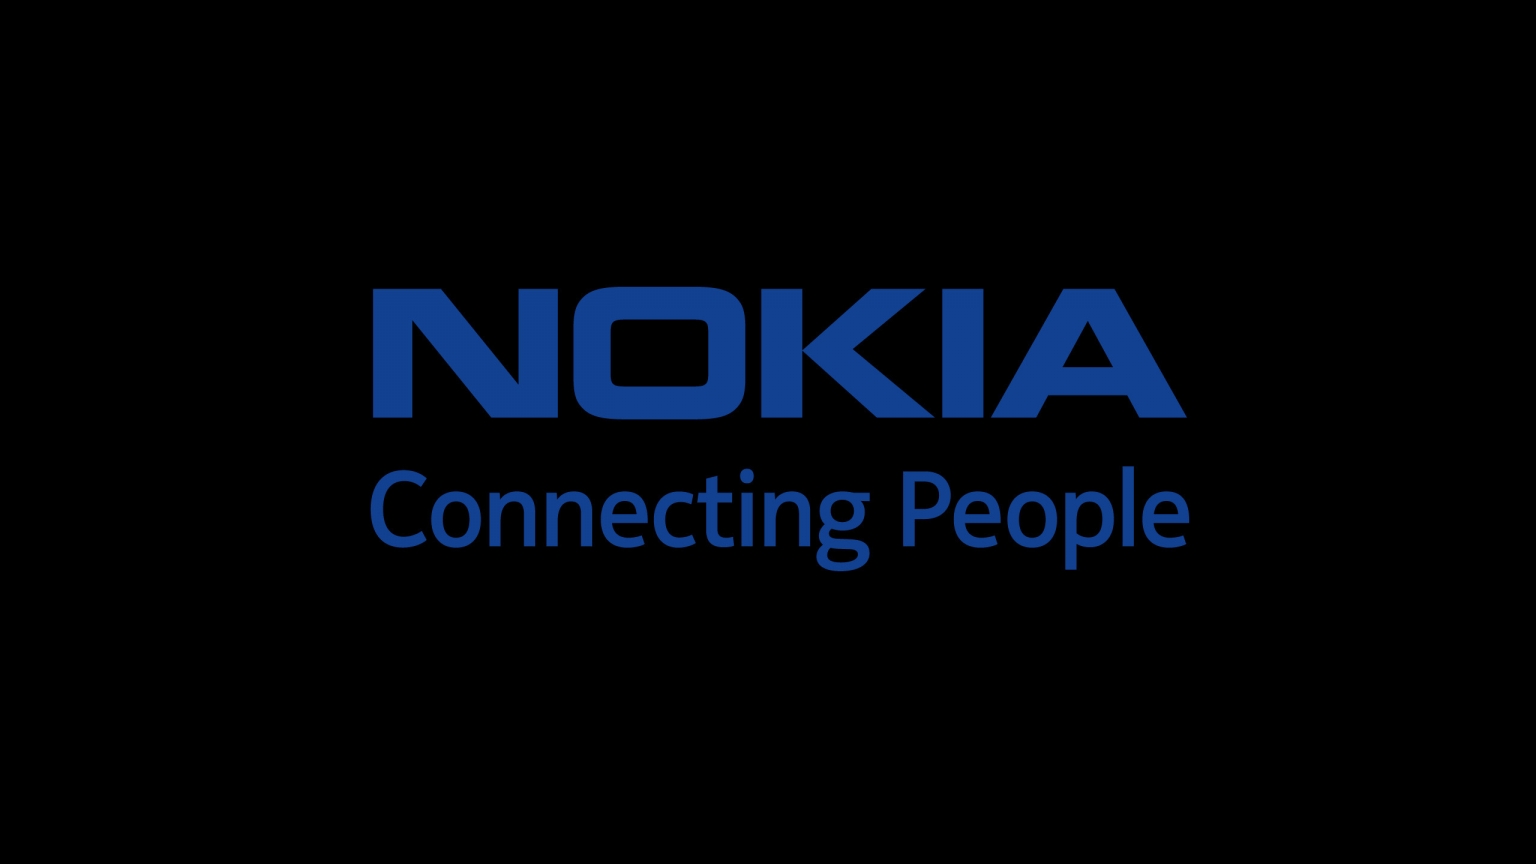 Nokia for 1536 x 864 HDTV resolution